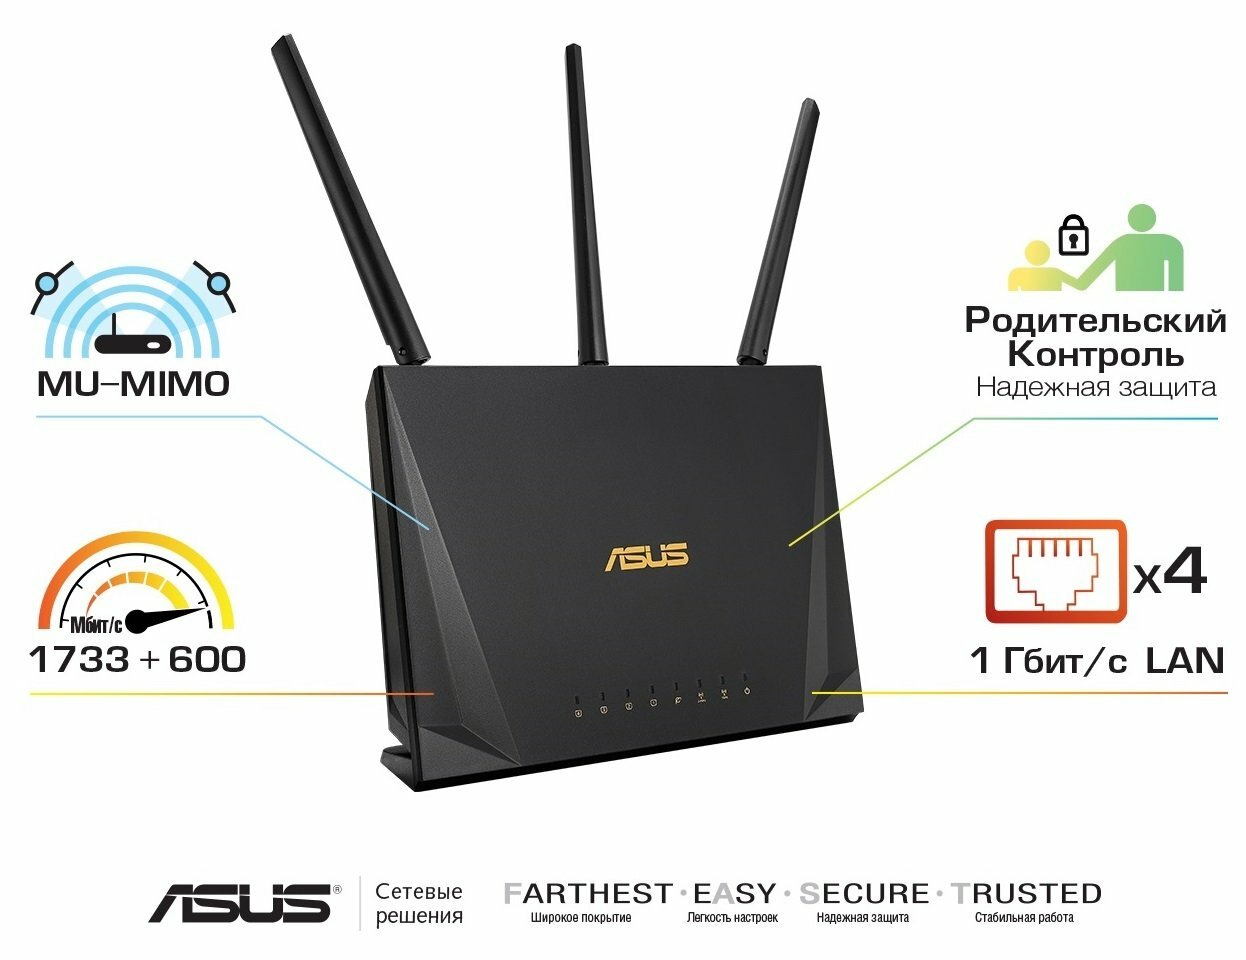 ASUS RT-AC85P Wireless AC2400 Dual-Band Gaming Gigabit Router /